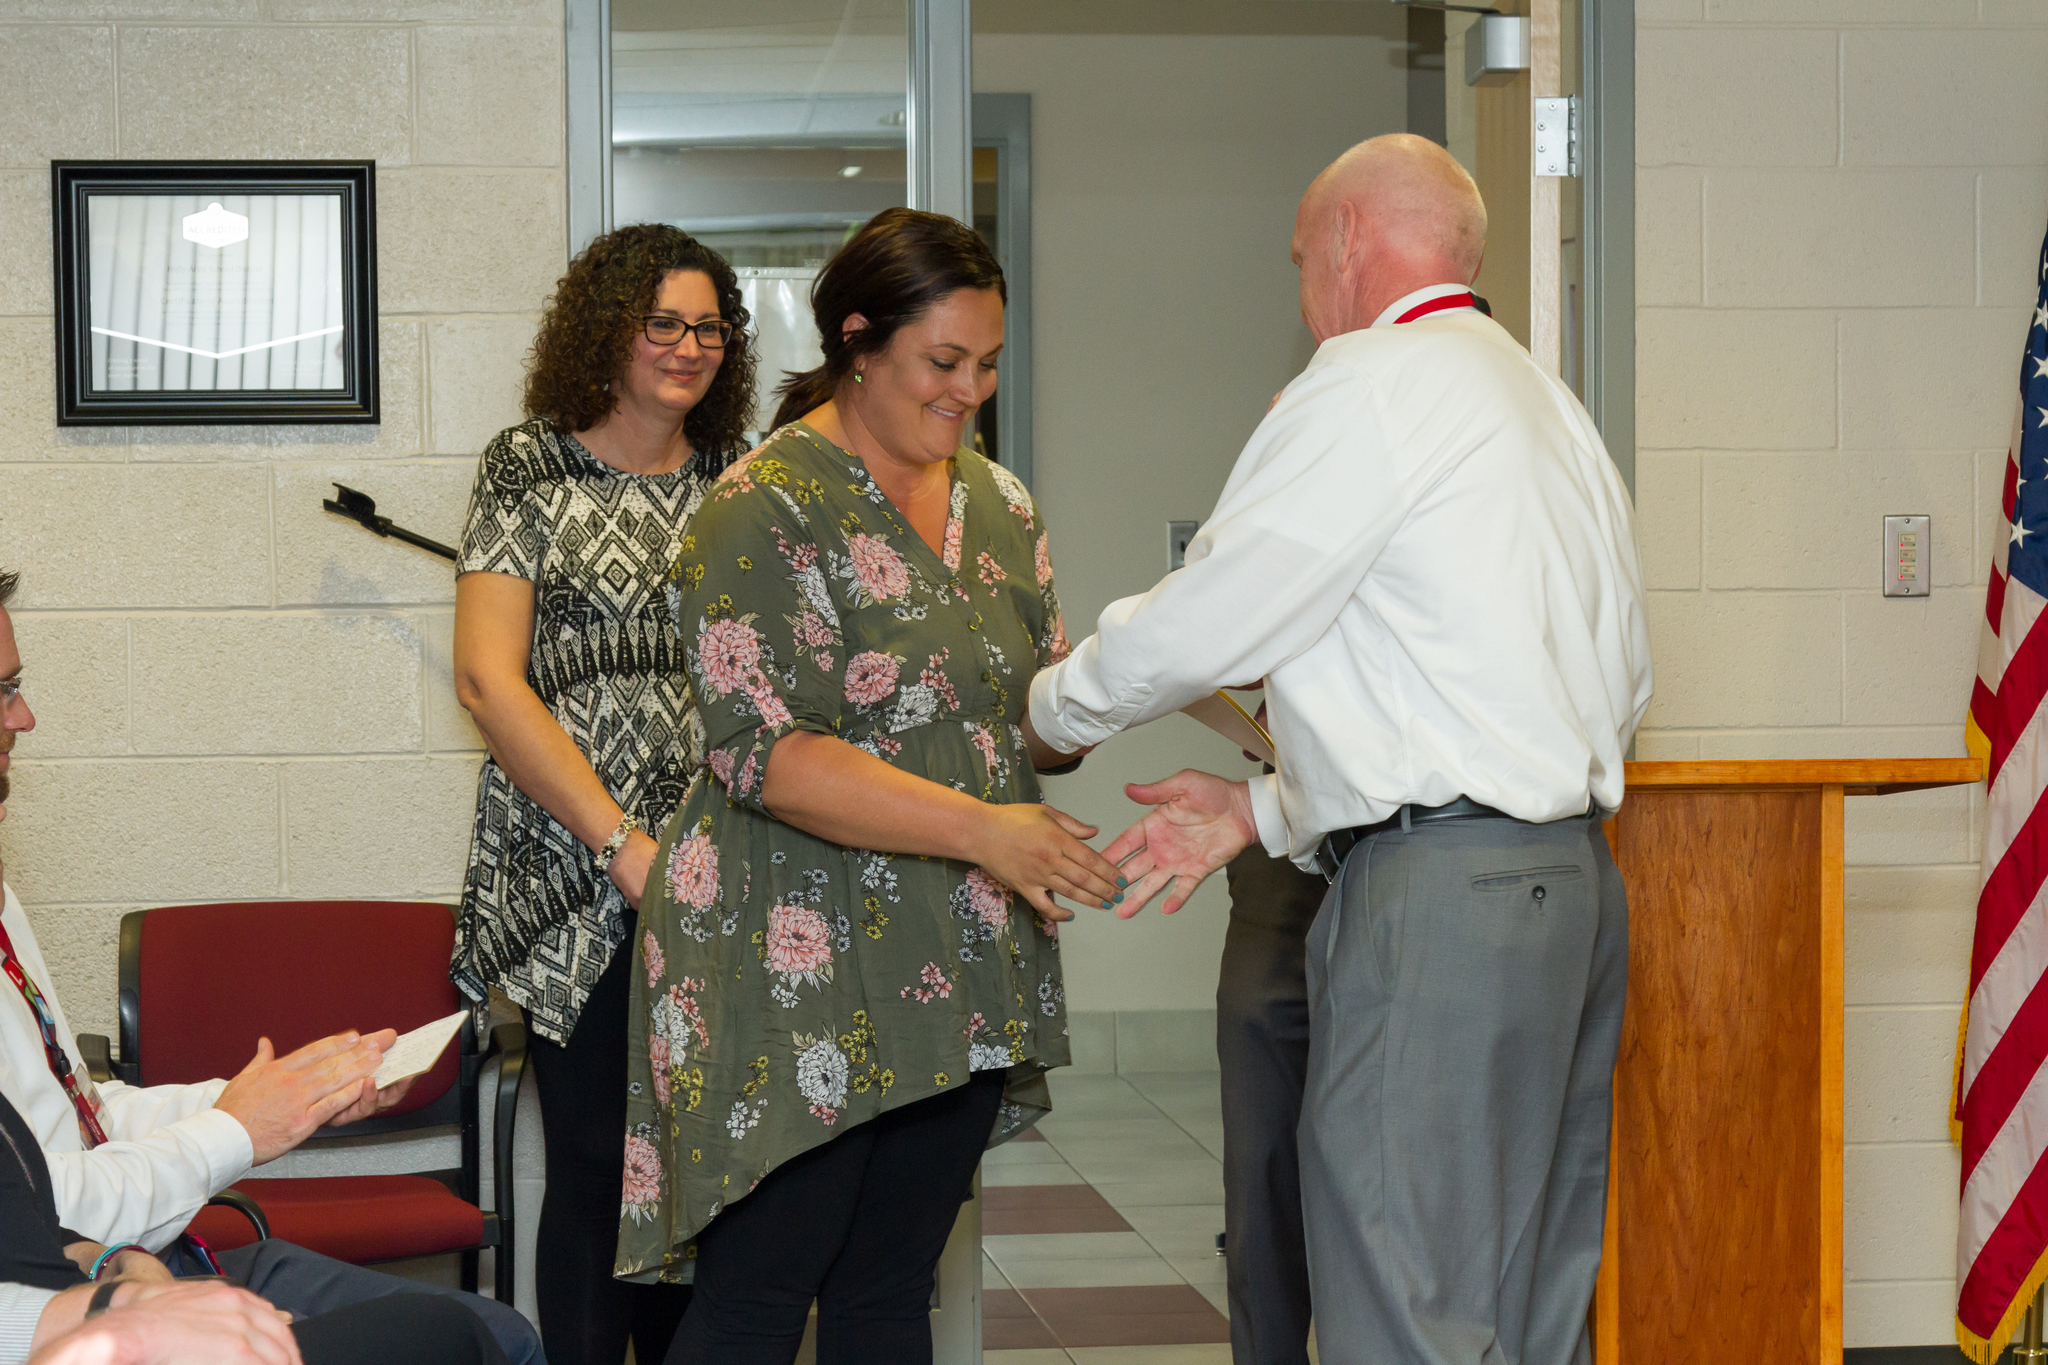 Mrs. Miller receiving her award from Mr. Nuss